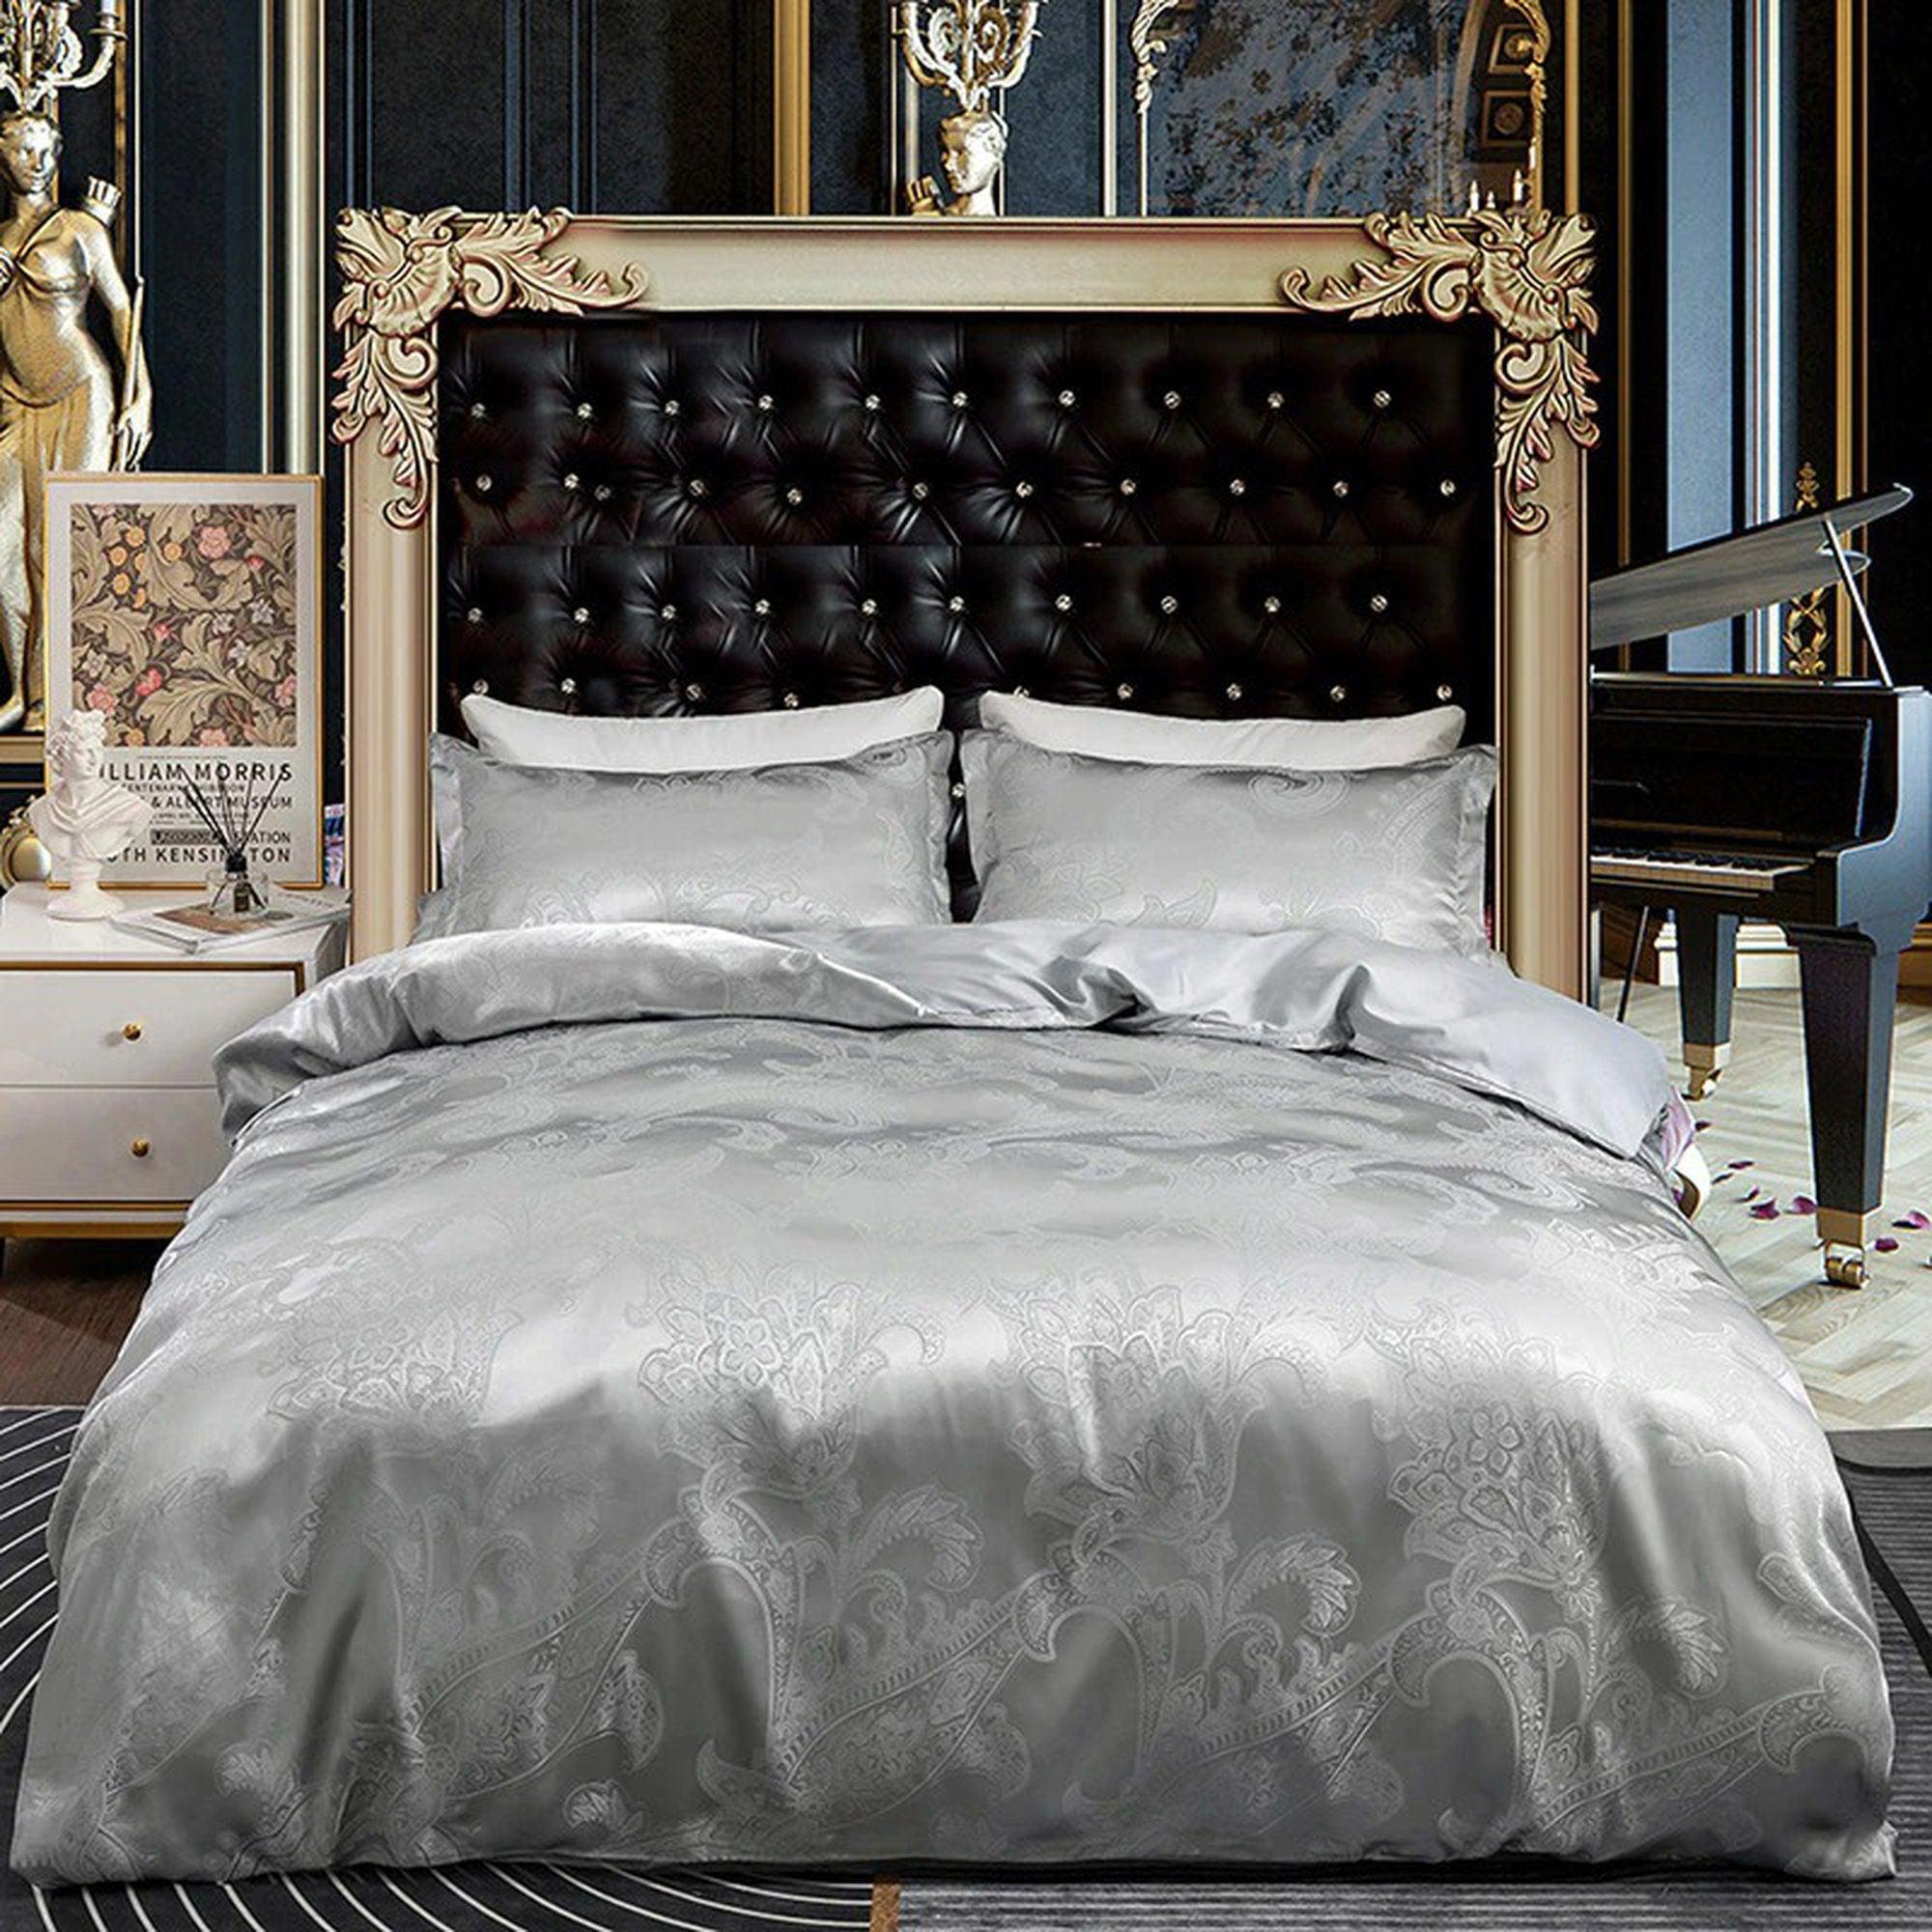 daintyduvet Luxury Ash Grey Bedding made with Silky Jacquard Fabric, Damask Duvet Cover Set, Designer Bedding, Aesthetic Duvet King Queen Full Twin